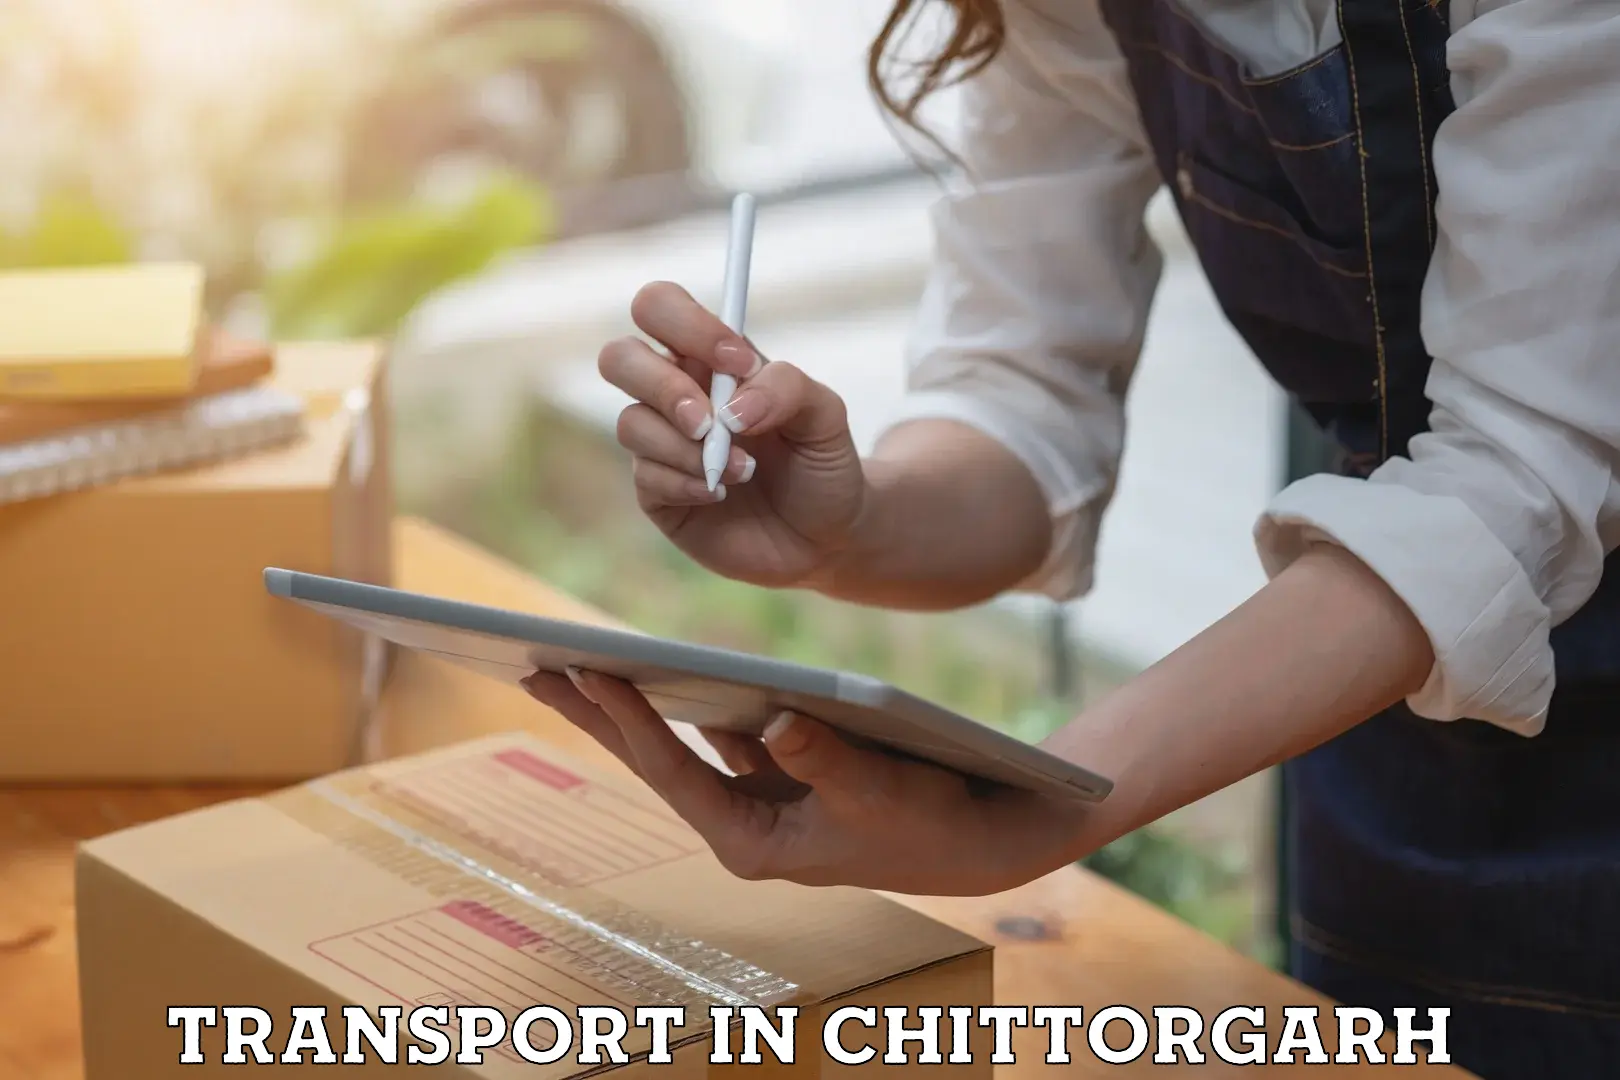 Transportation services in Chittorgarh